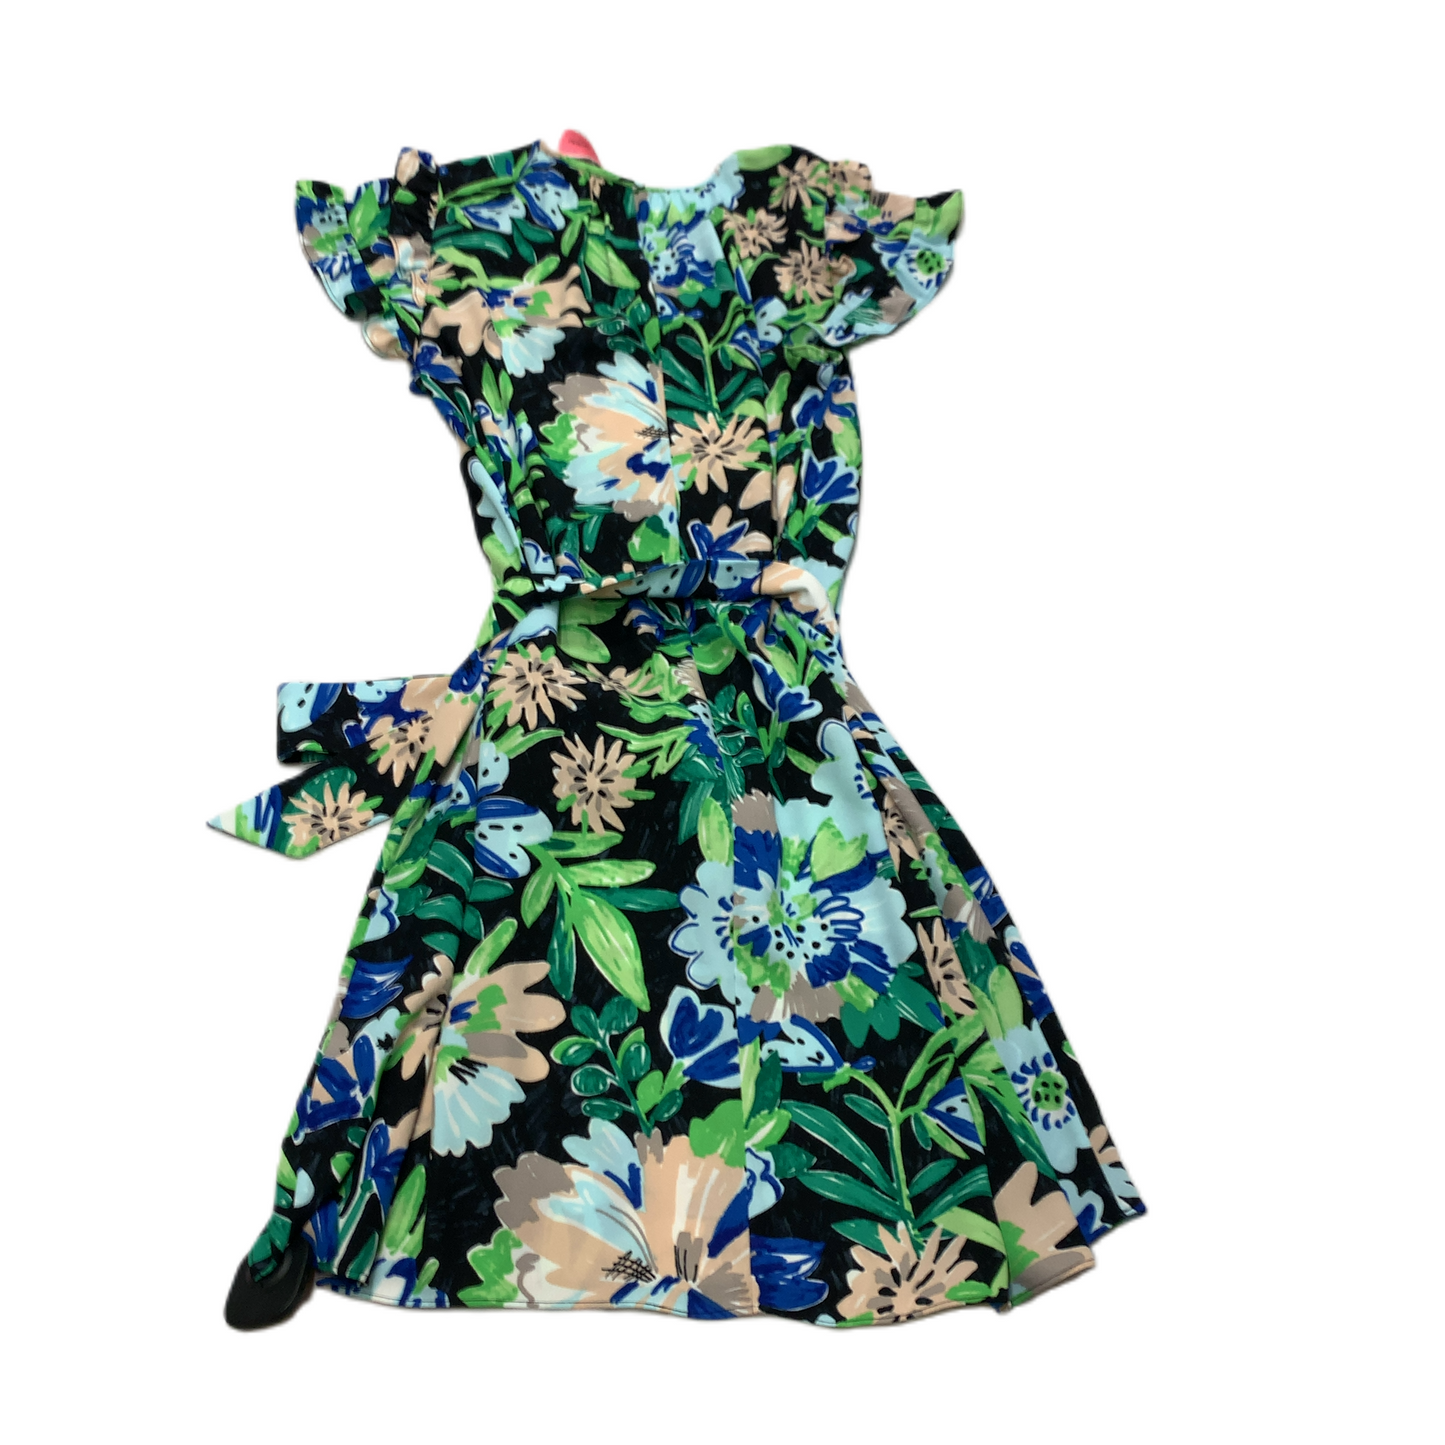 Dress Designer By Kate Spade  Size: S